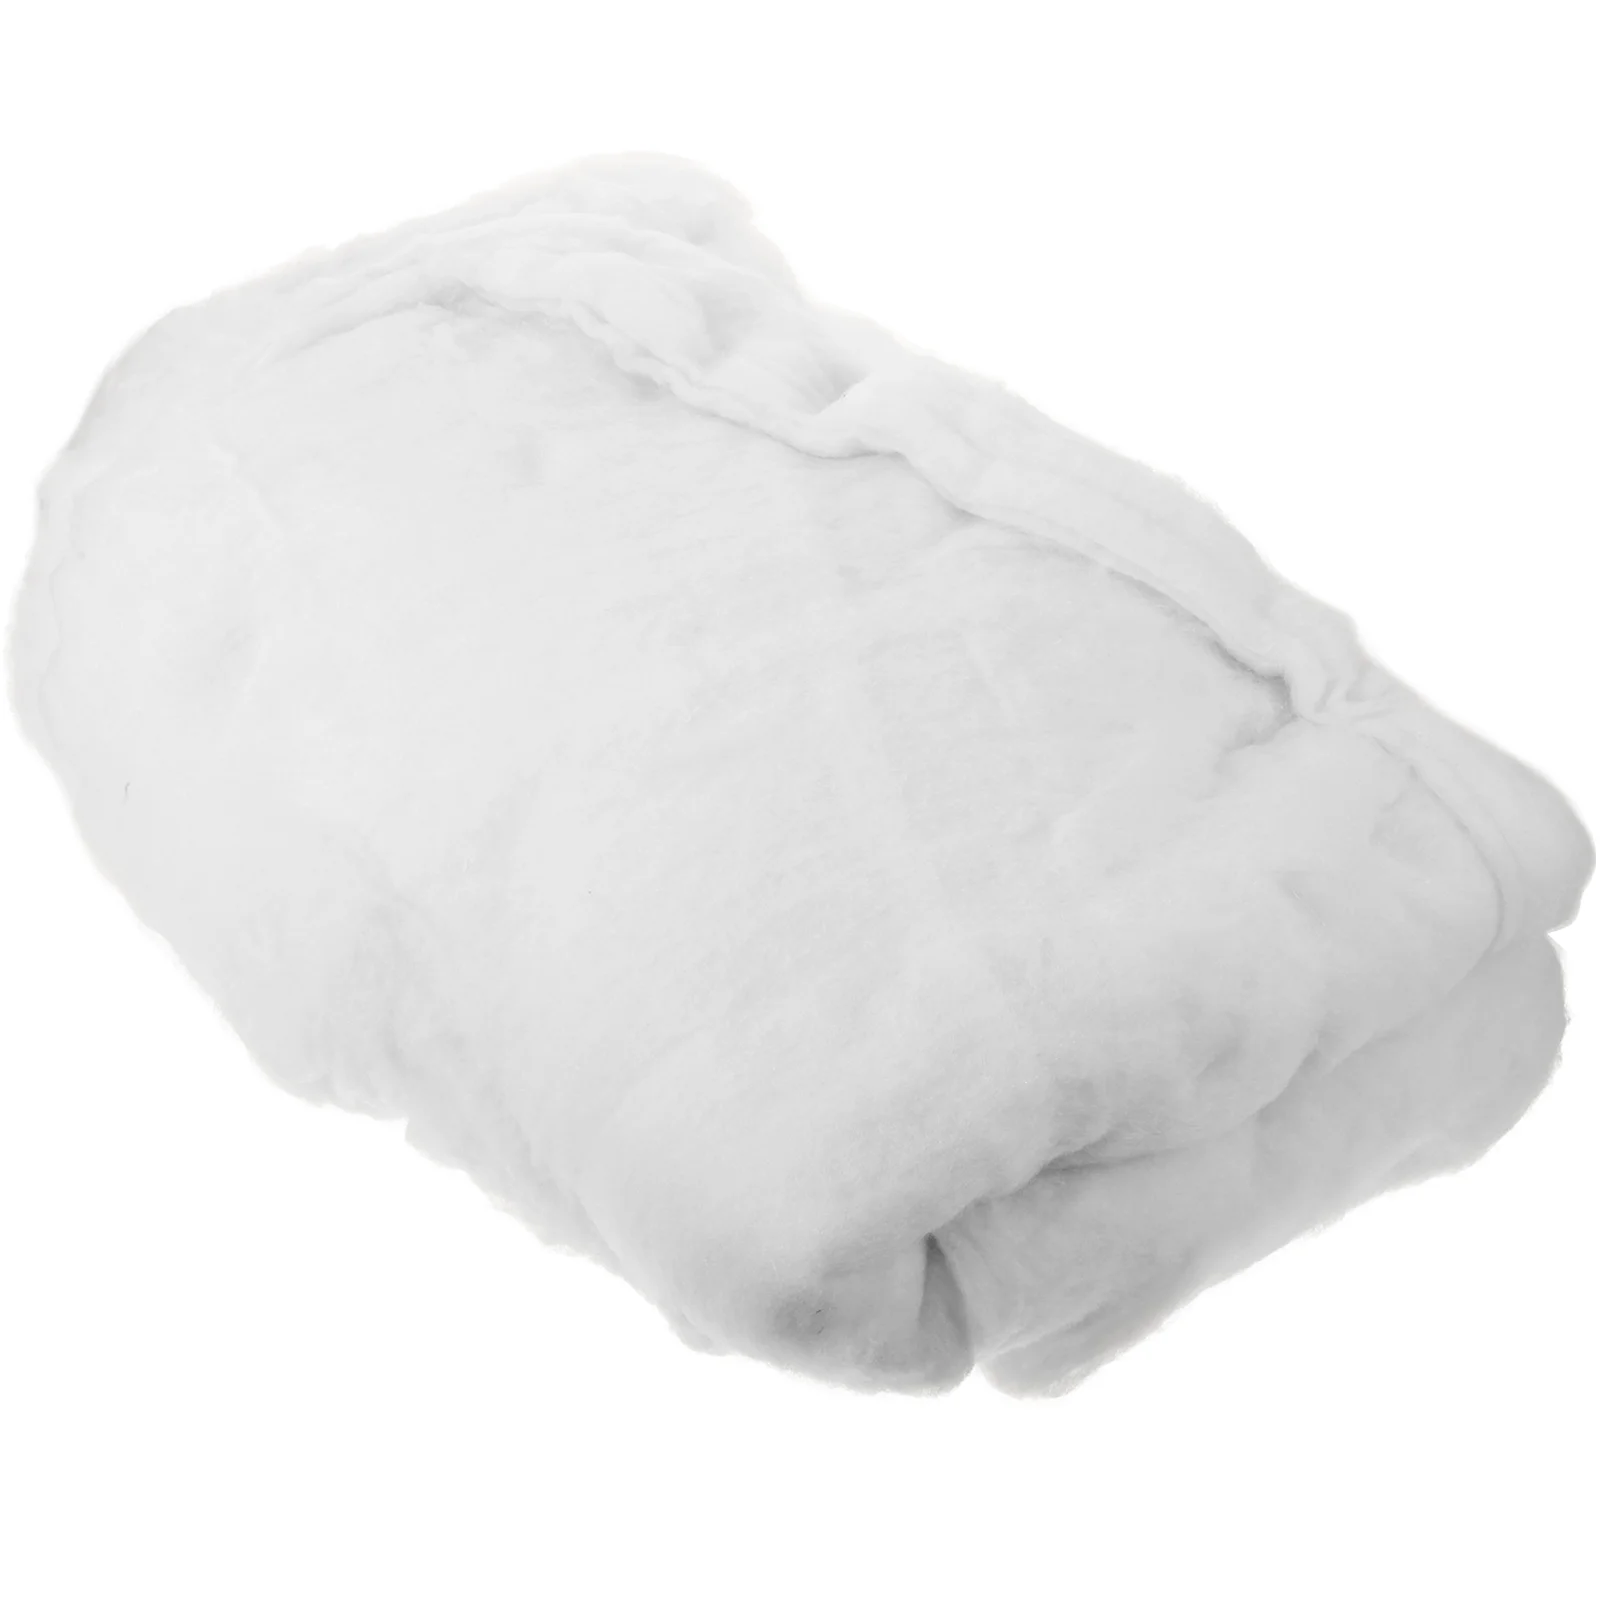 

Quilt Filler Cotton Batting Core Filling Warm Bed Linen Mattress Pads White Prop Household